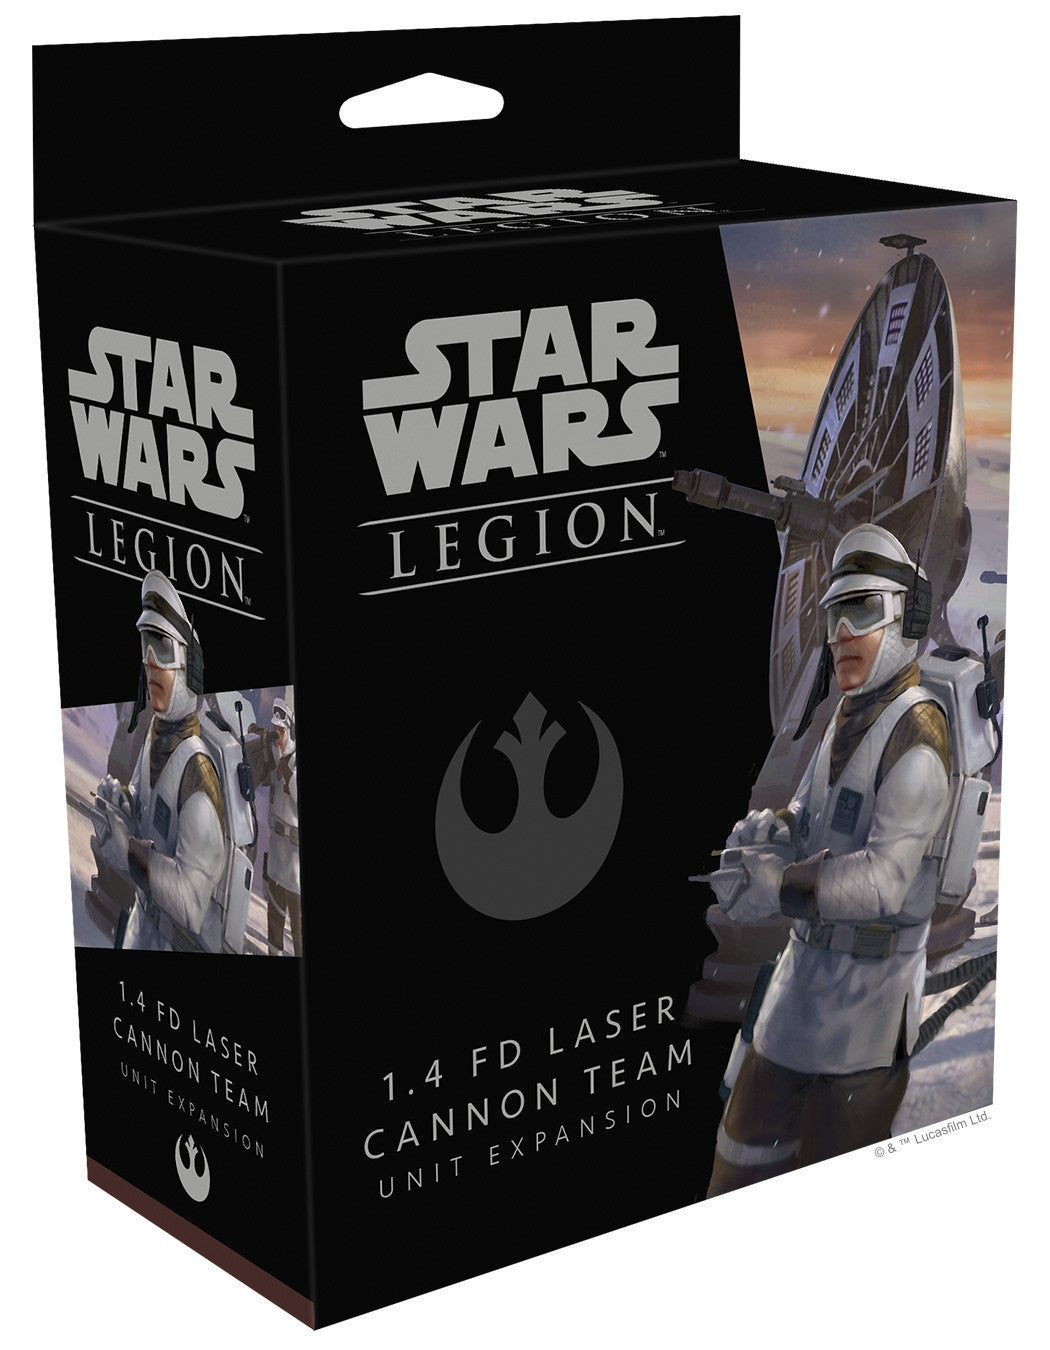 1.4 FD Laser Cannon Team Unit Expansion - Star Wars Legion